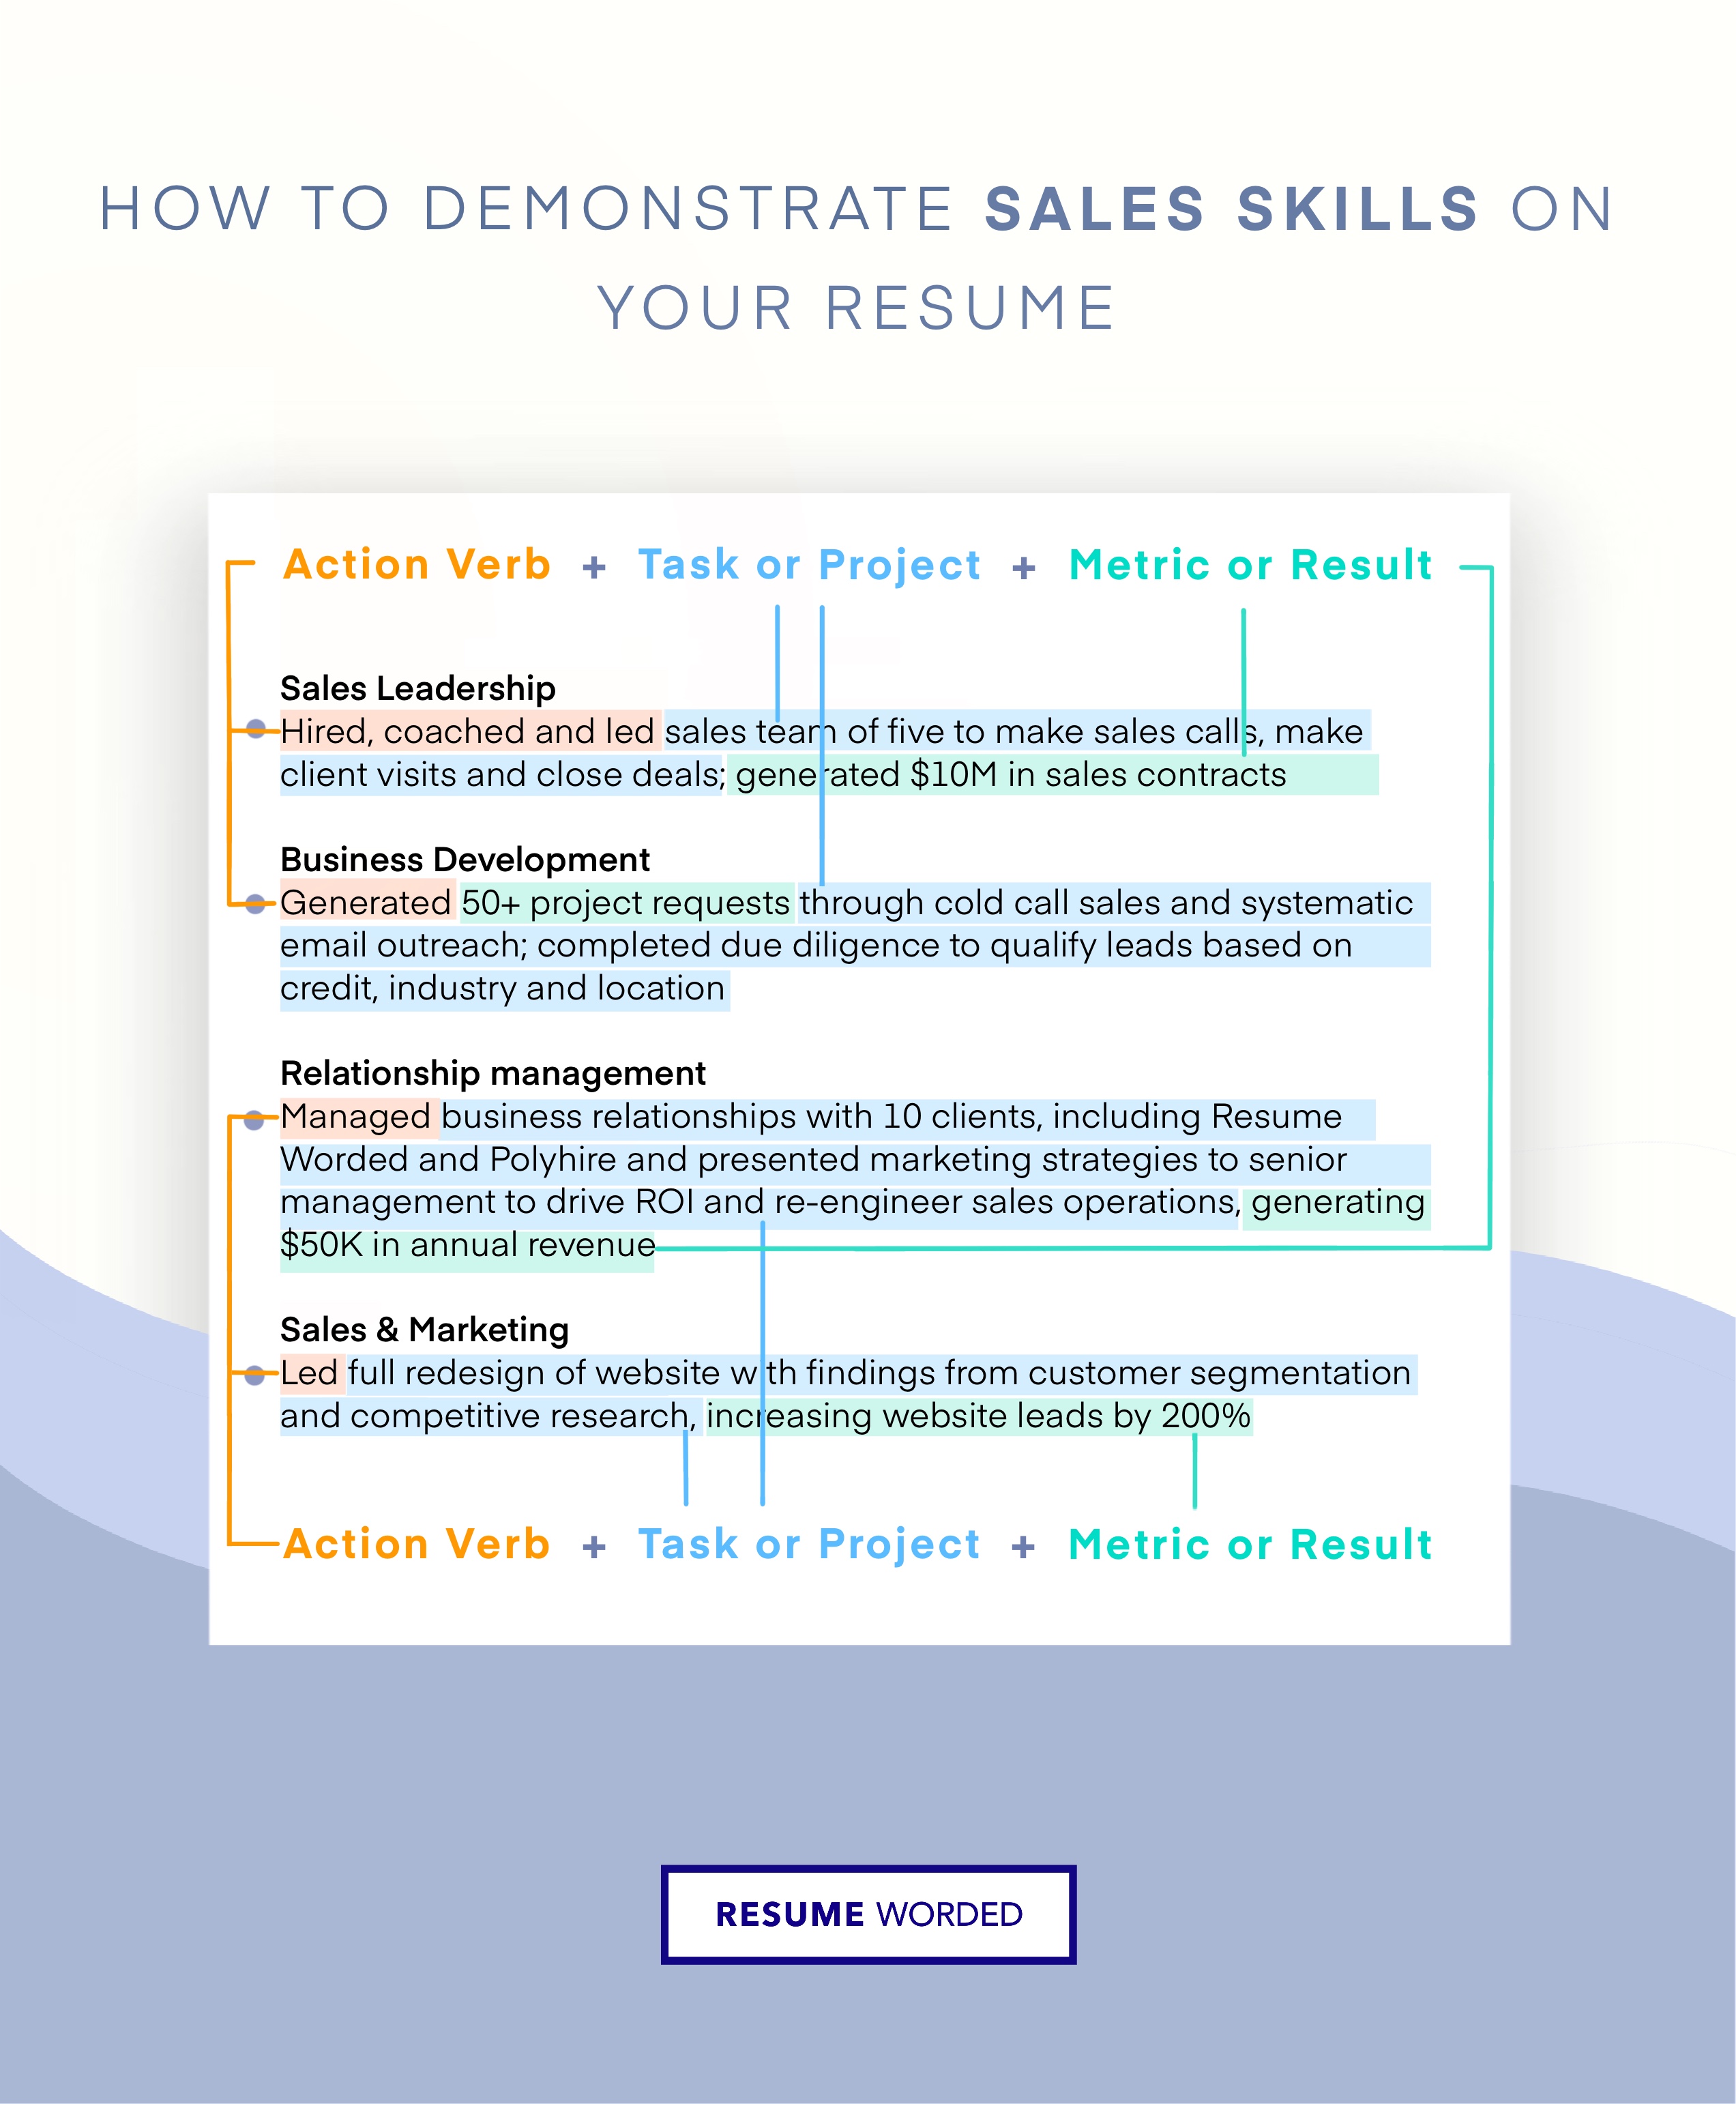 Show off your customer service skills - Sales Associate / Retail Salesperson CV